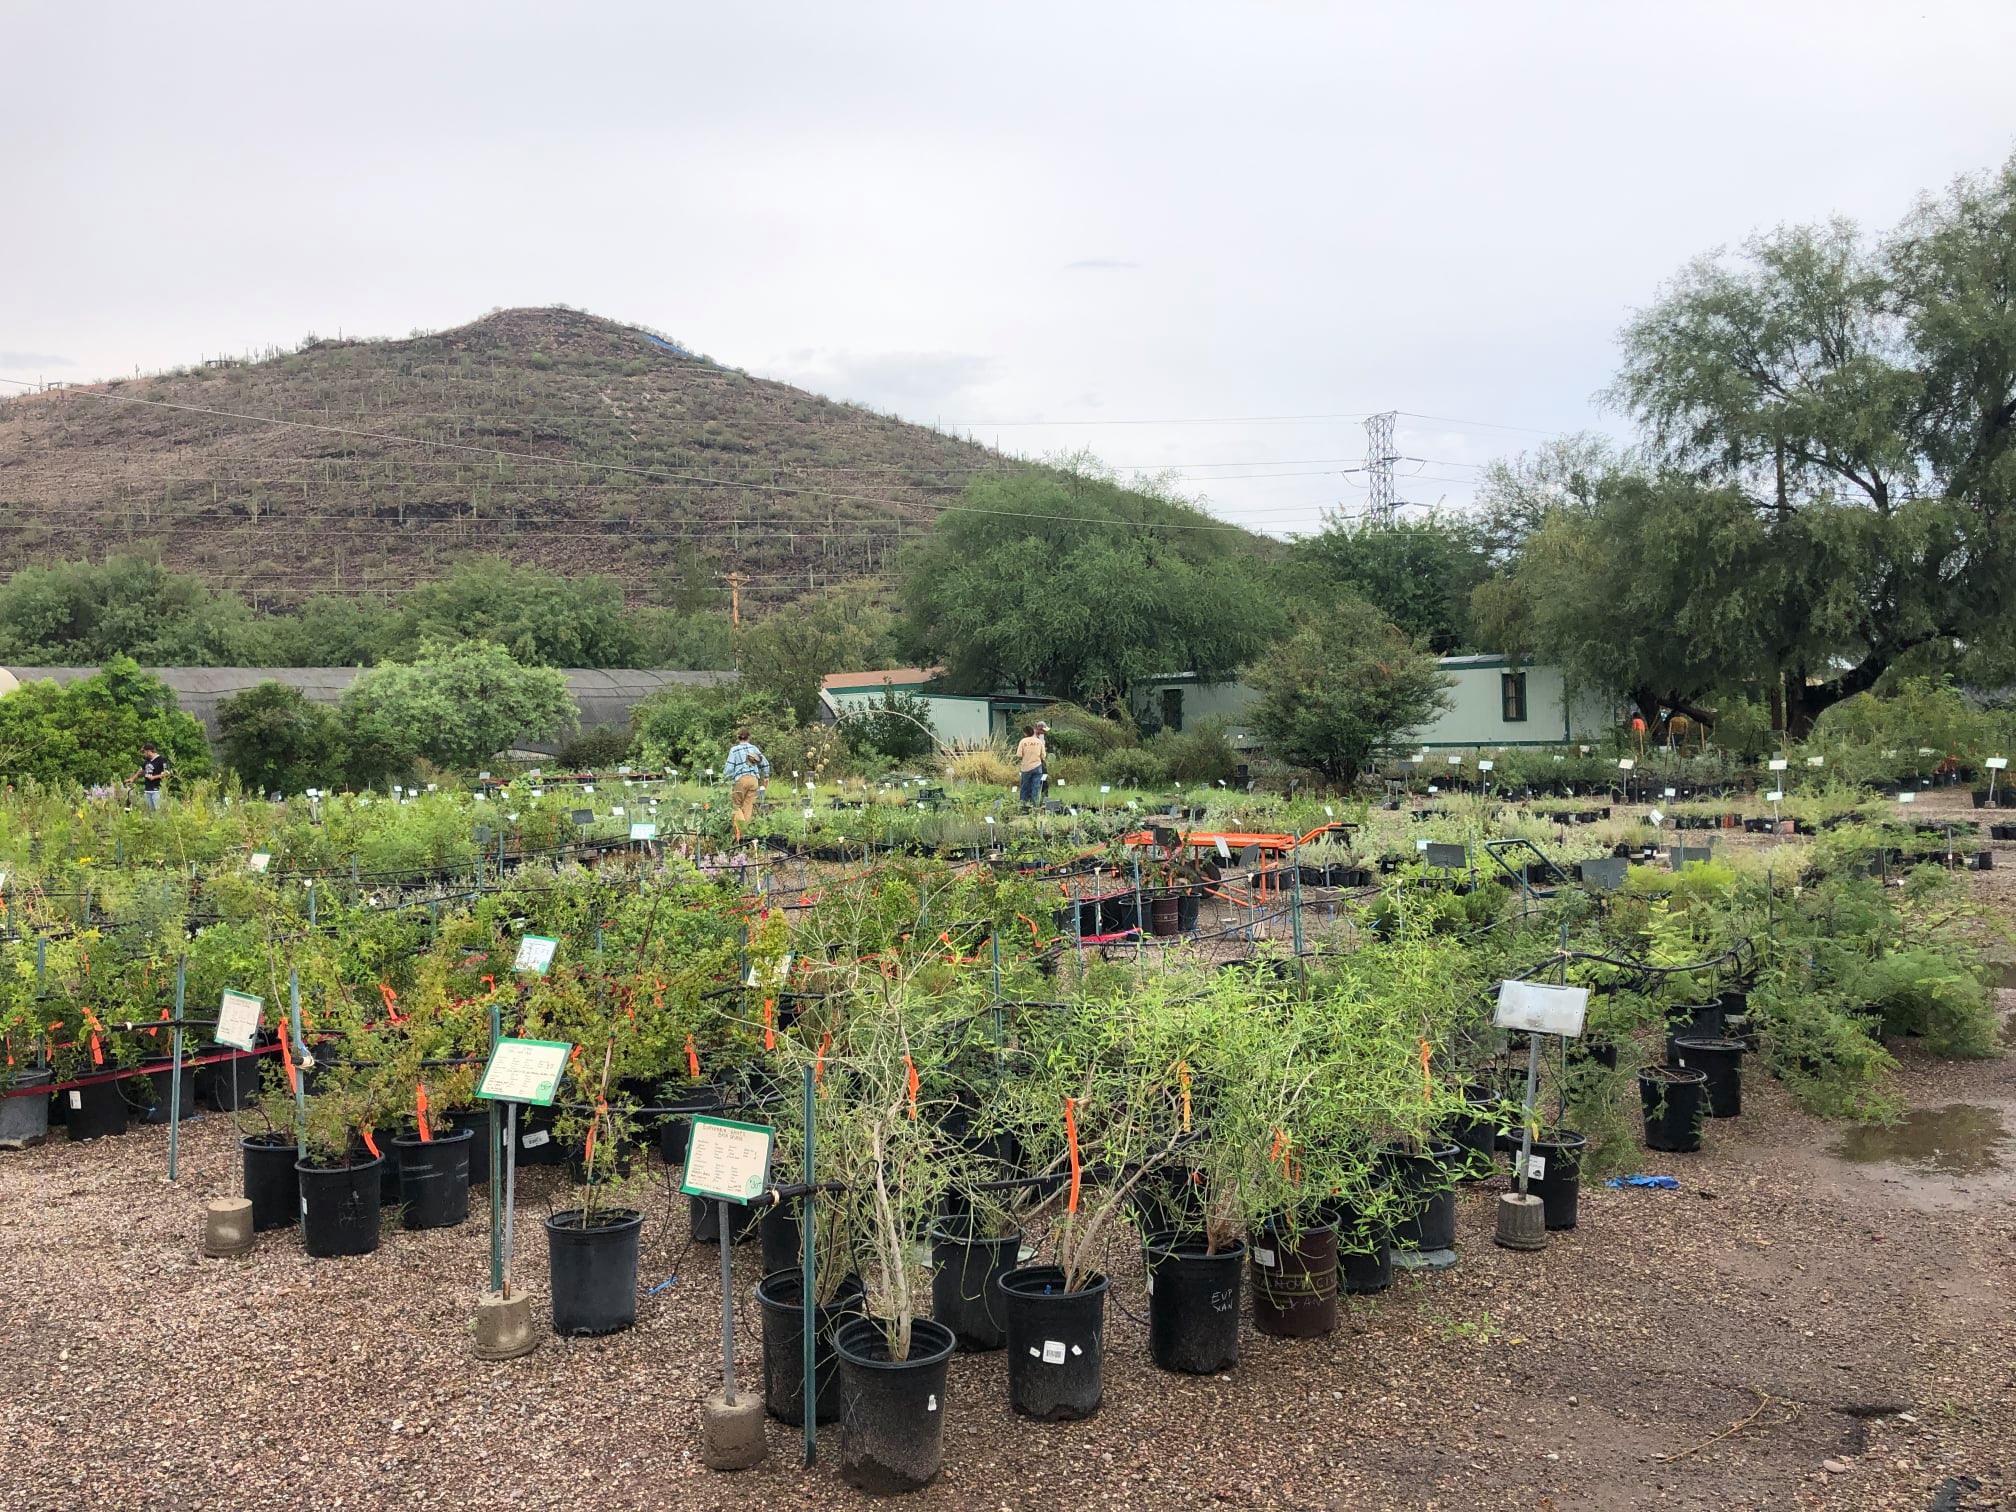 Desert Survivors plants